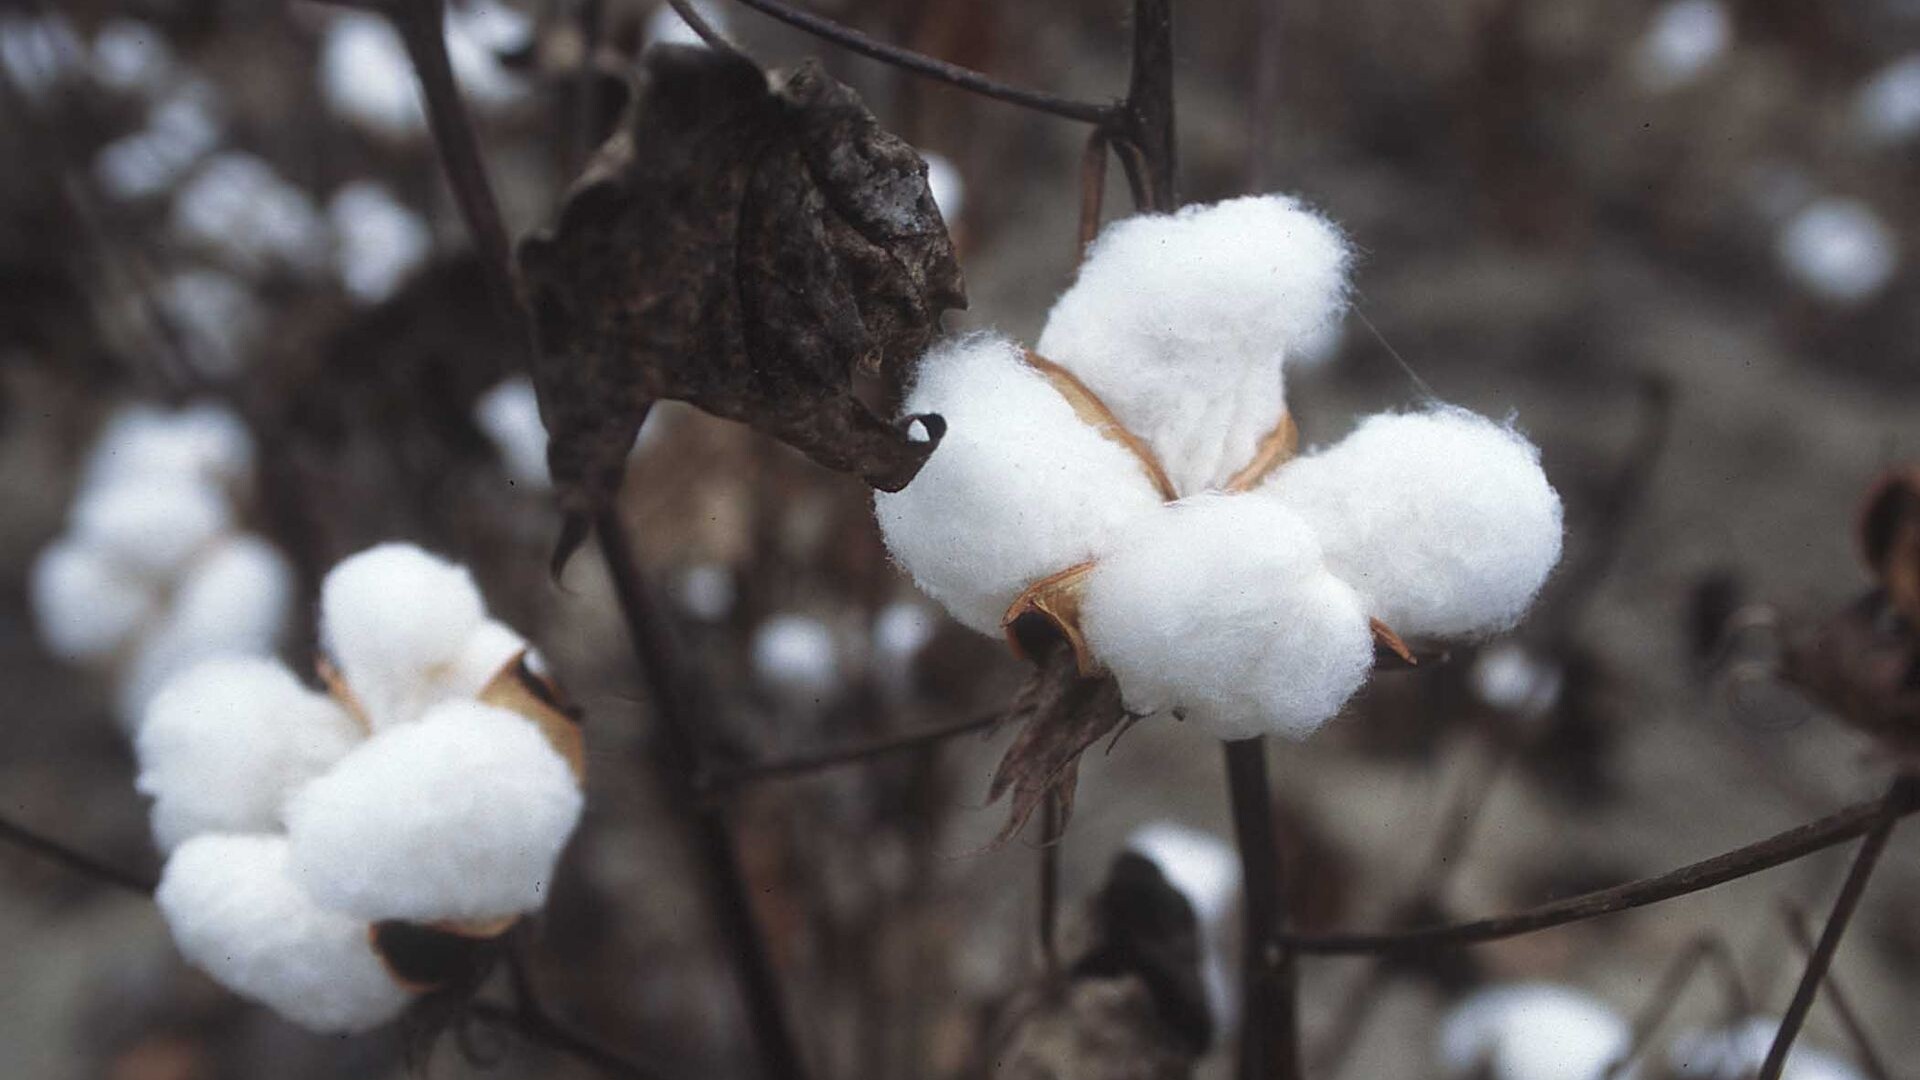 A Cotton Focus on Fungicides